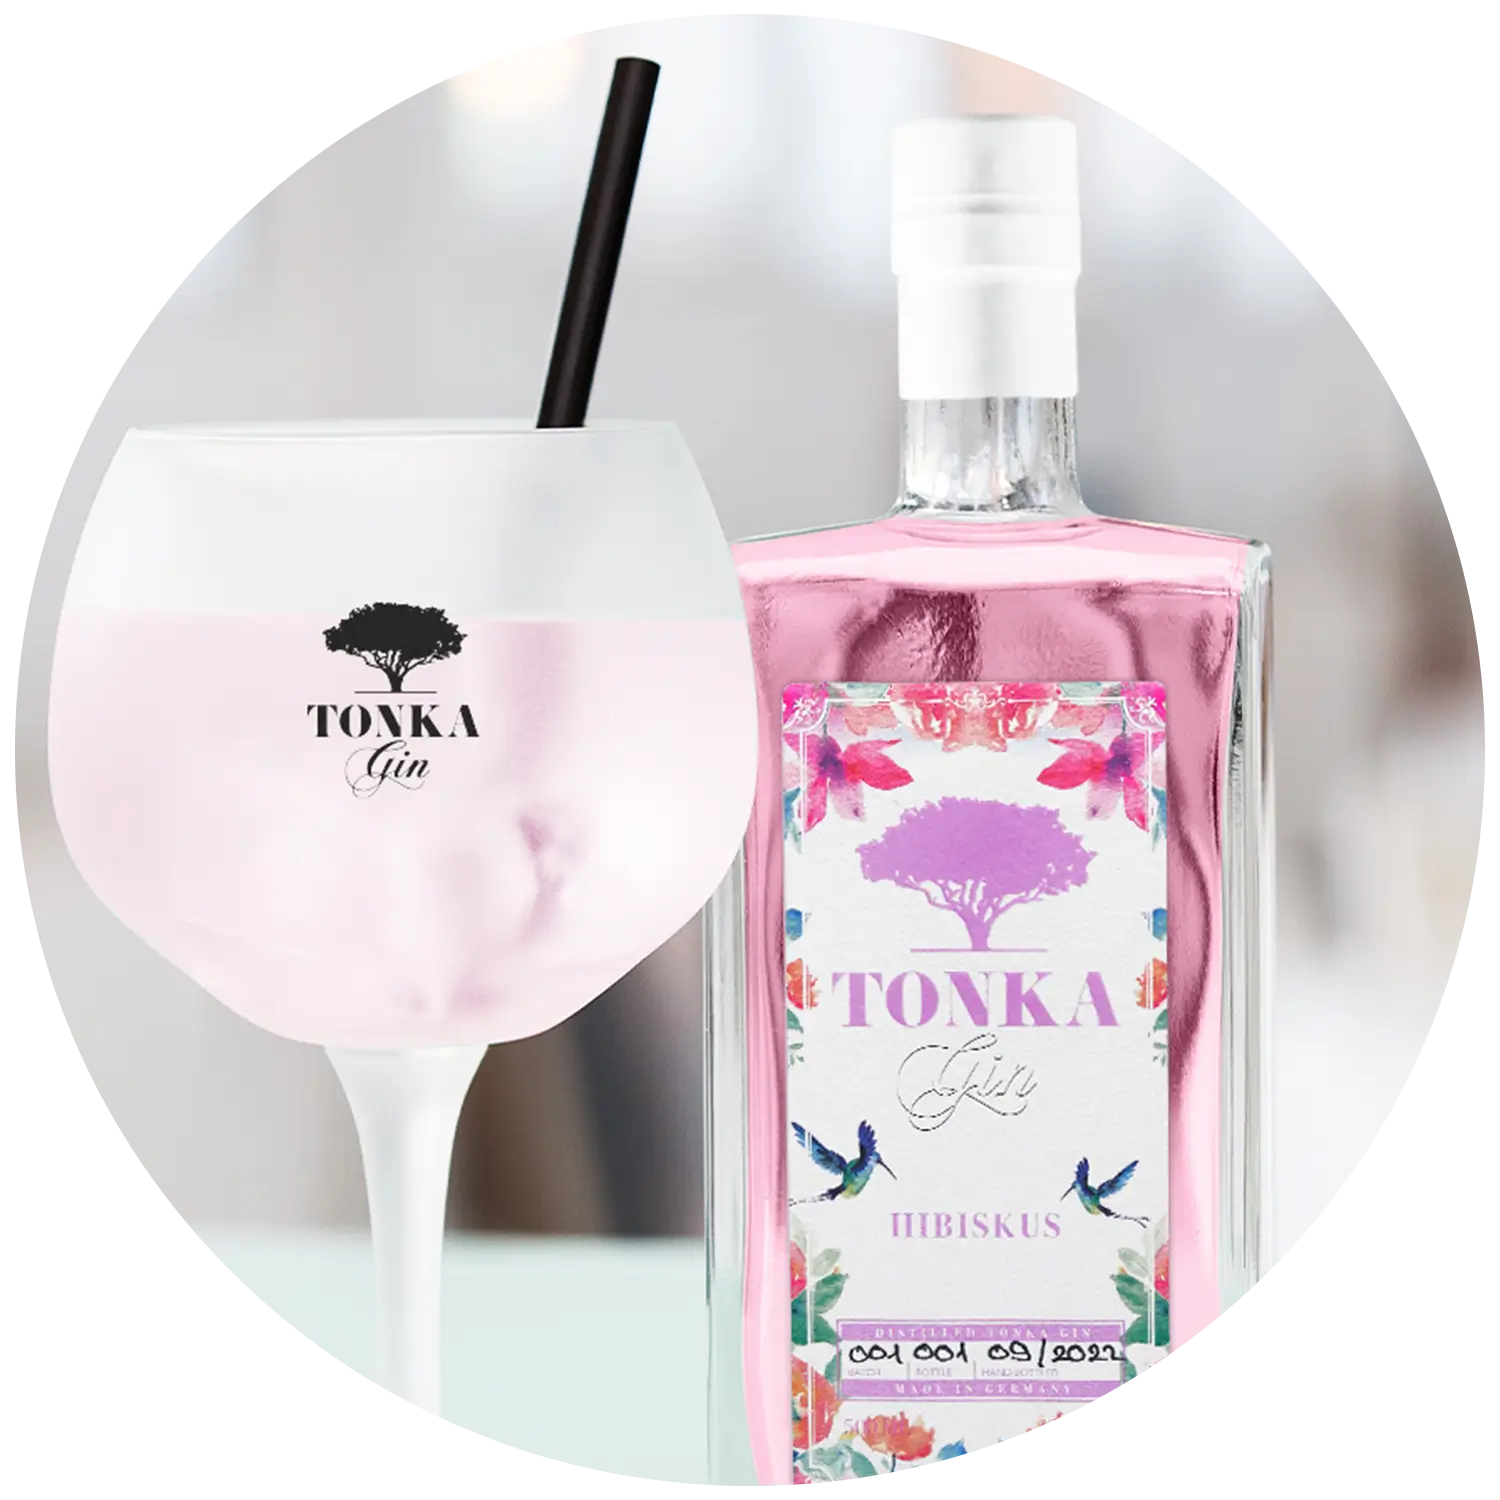 Tonka Gin – meets Hibiscus Tonka Spirituosenliebhaber hibiscus hibiscus bean - flowerGin